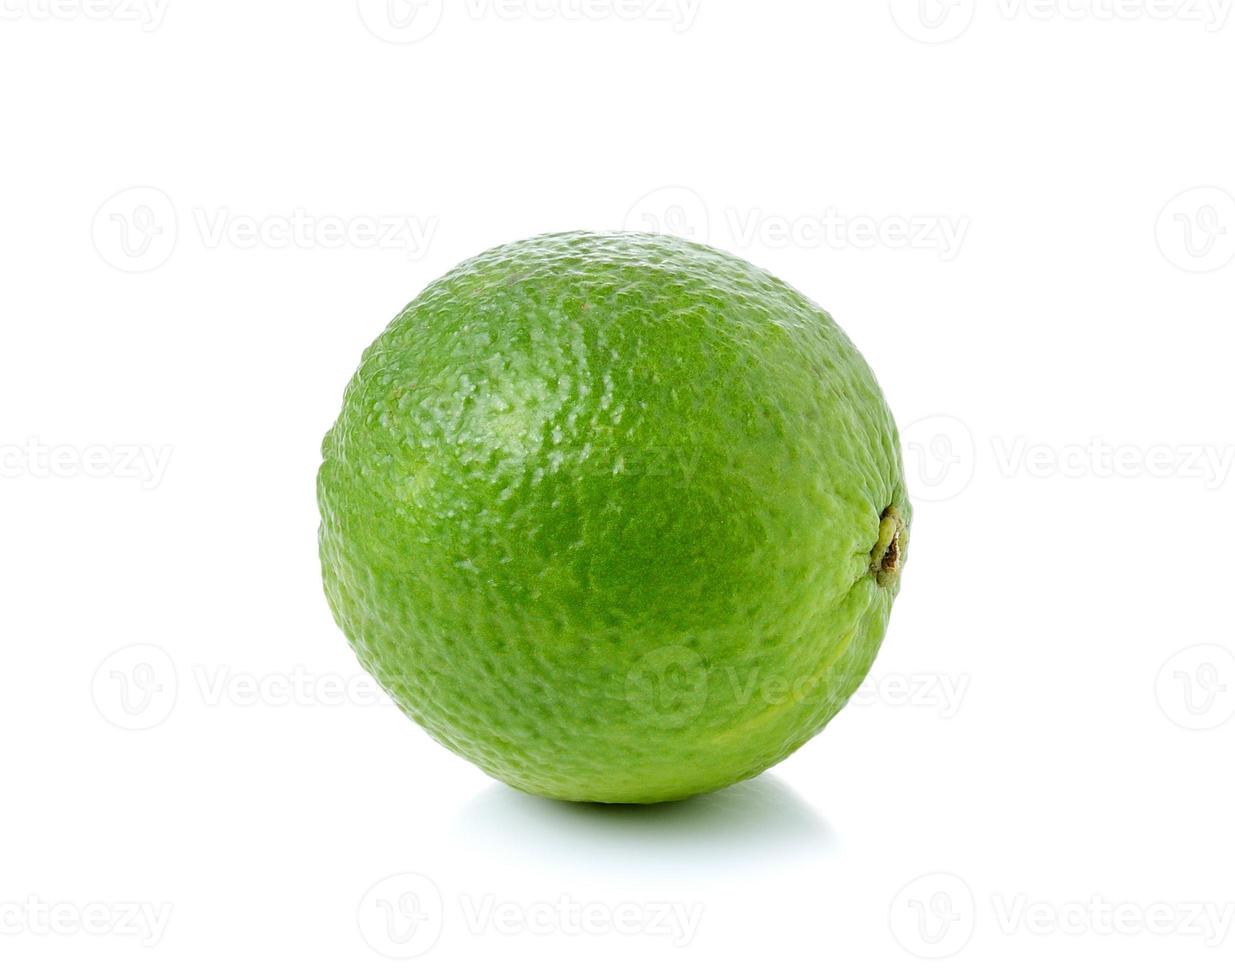 fresh lime on white background photo